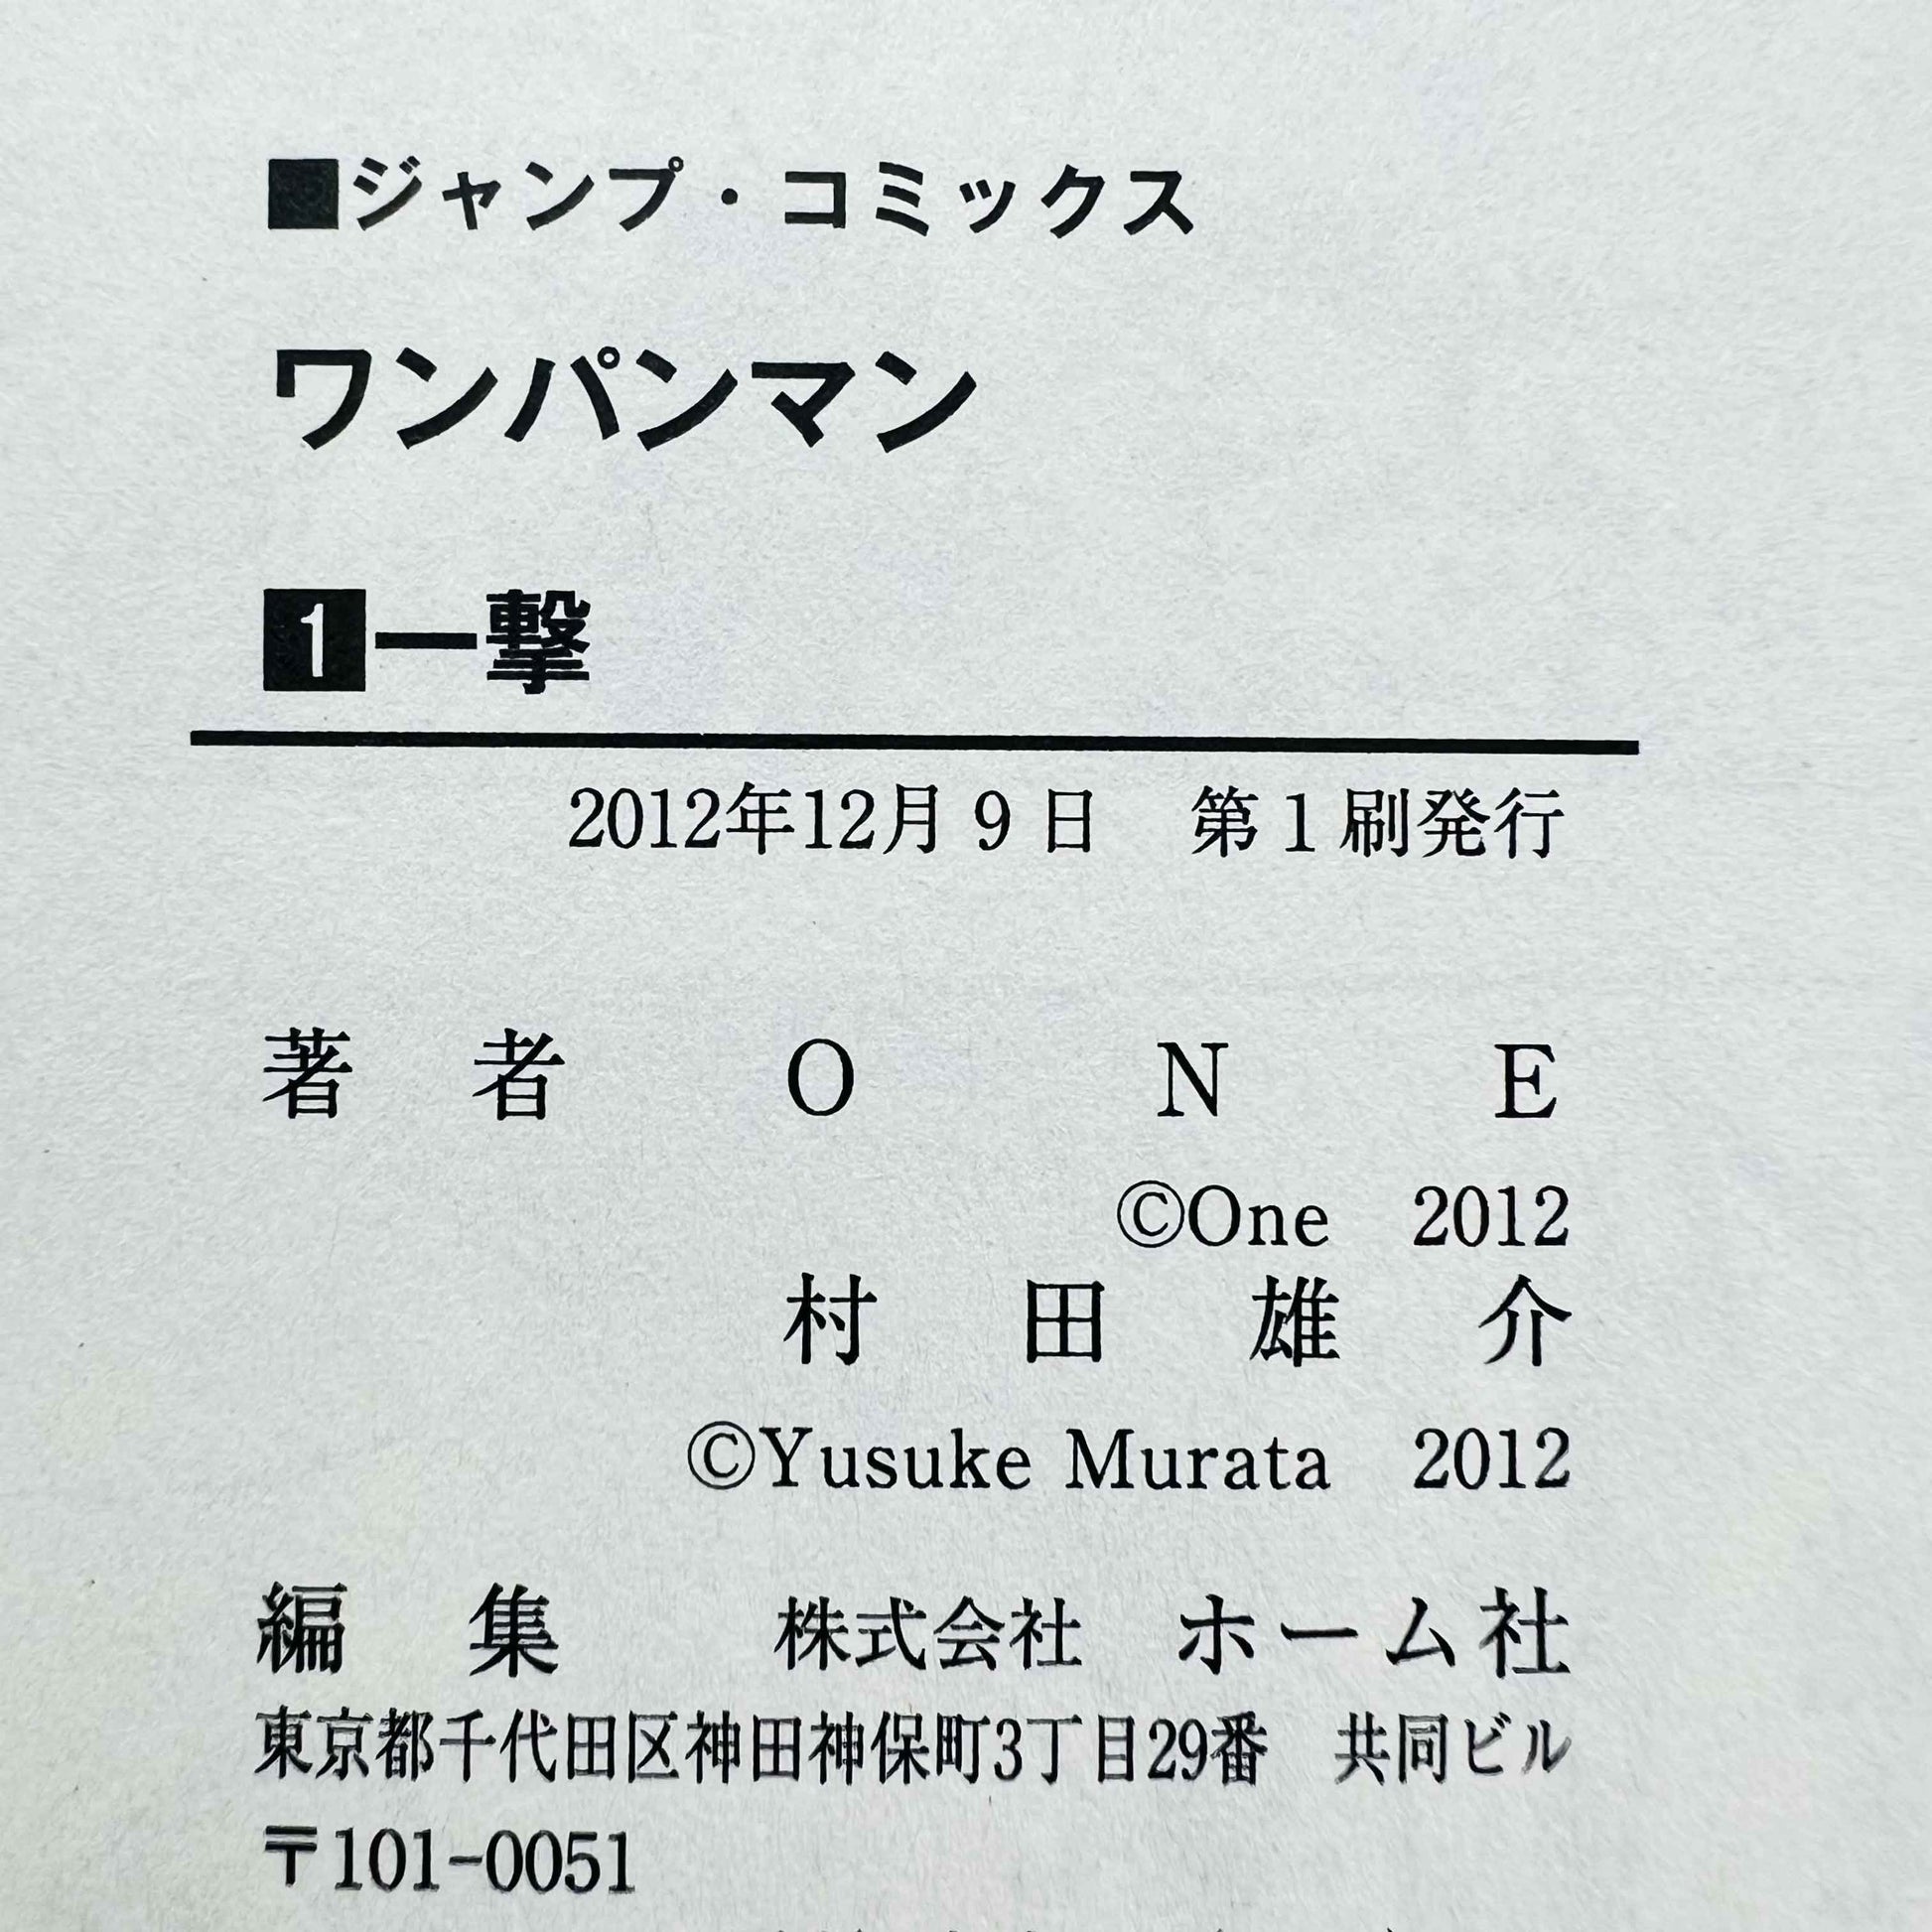 One Punch Man - Volume 01 - 1stPrint.net - 1st First Print Edition Manga Store - M-OPM-01-011